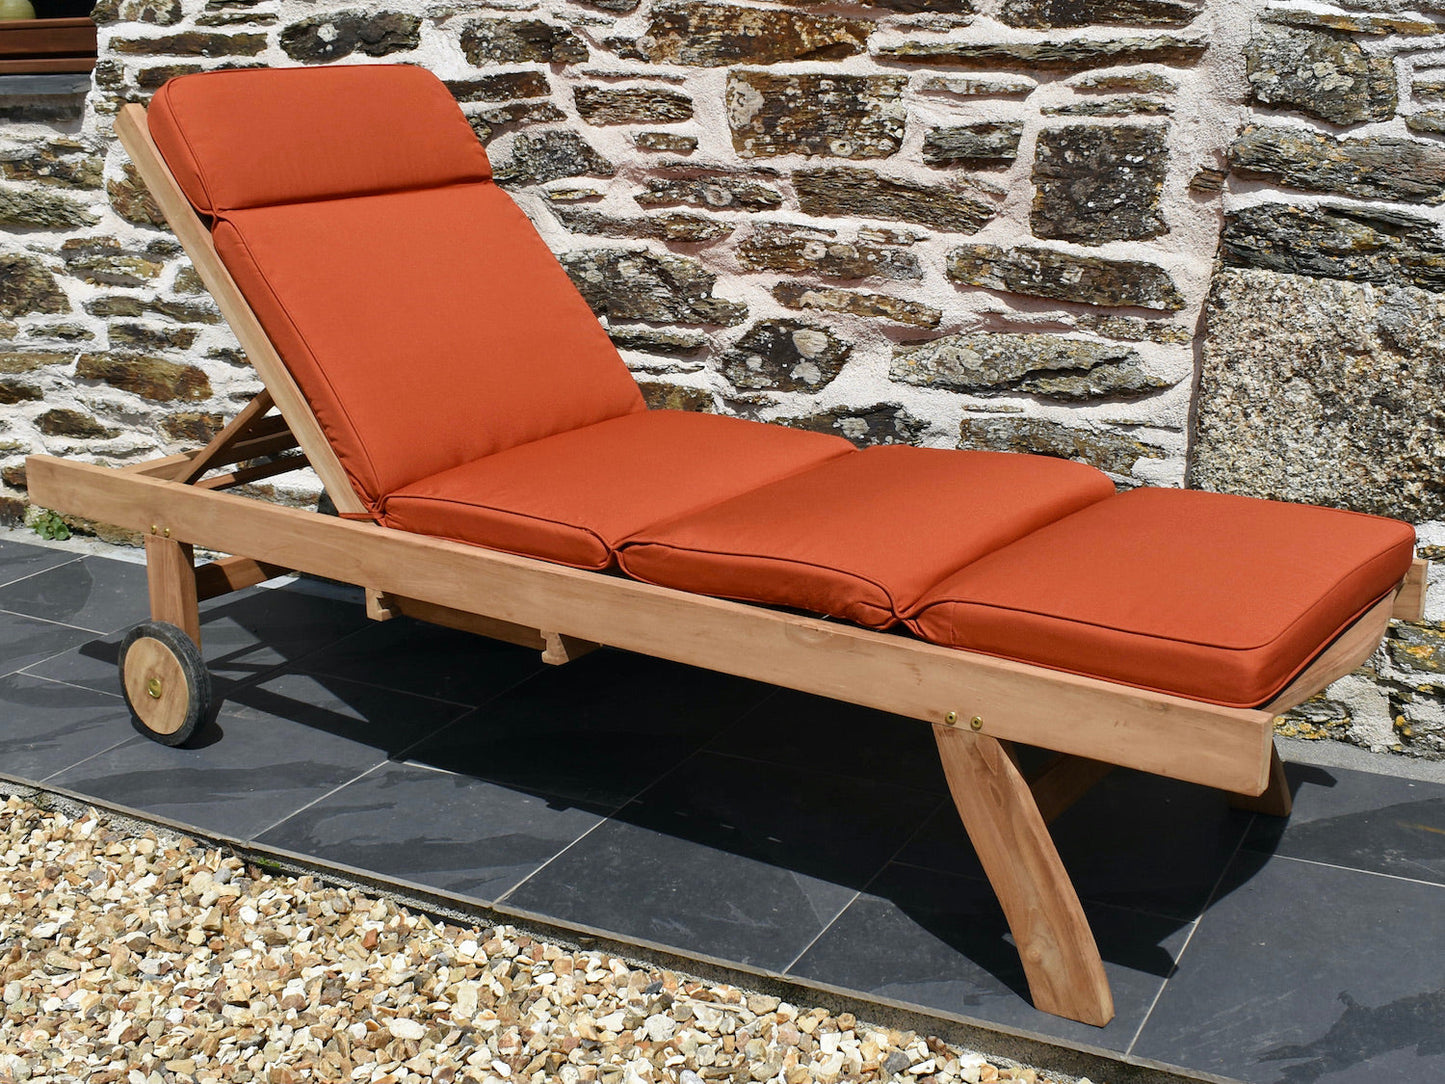 classic terracotta orange colour outdoor cushion for a traditional garden sun lounger chair